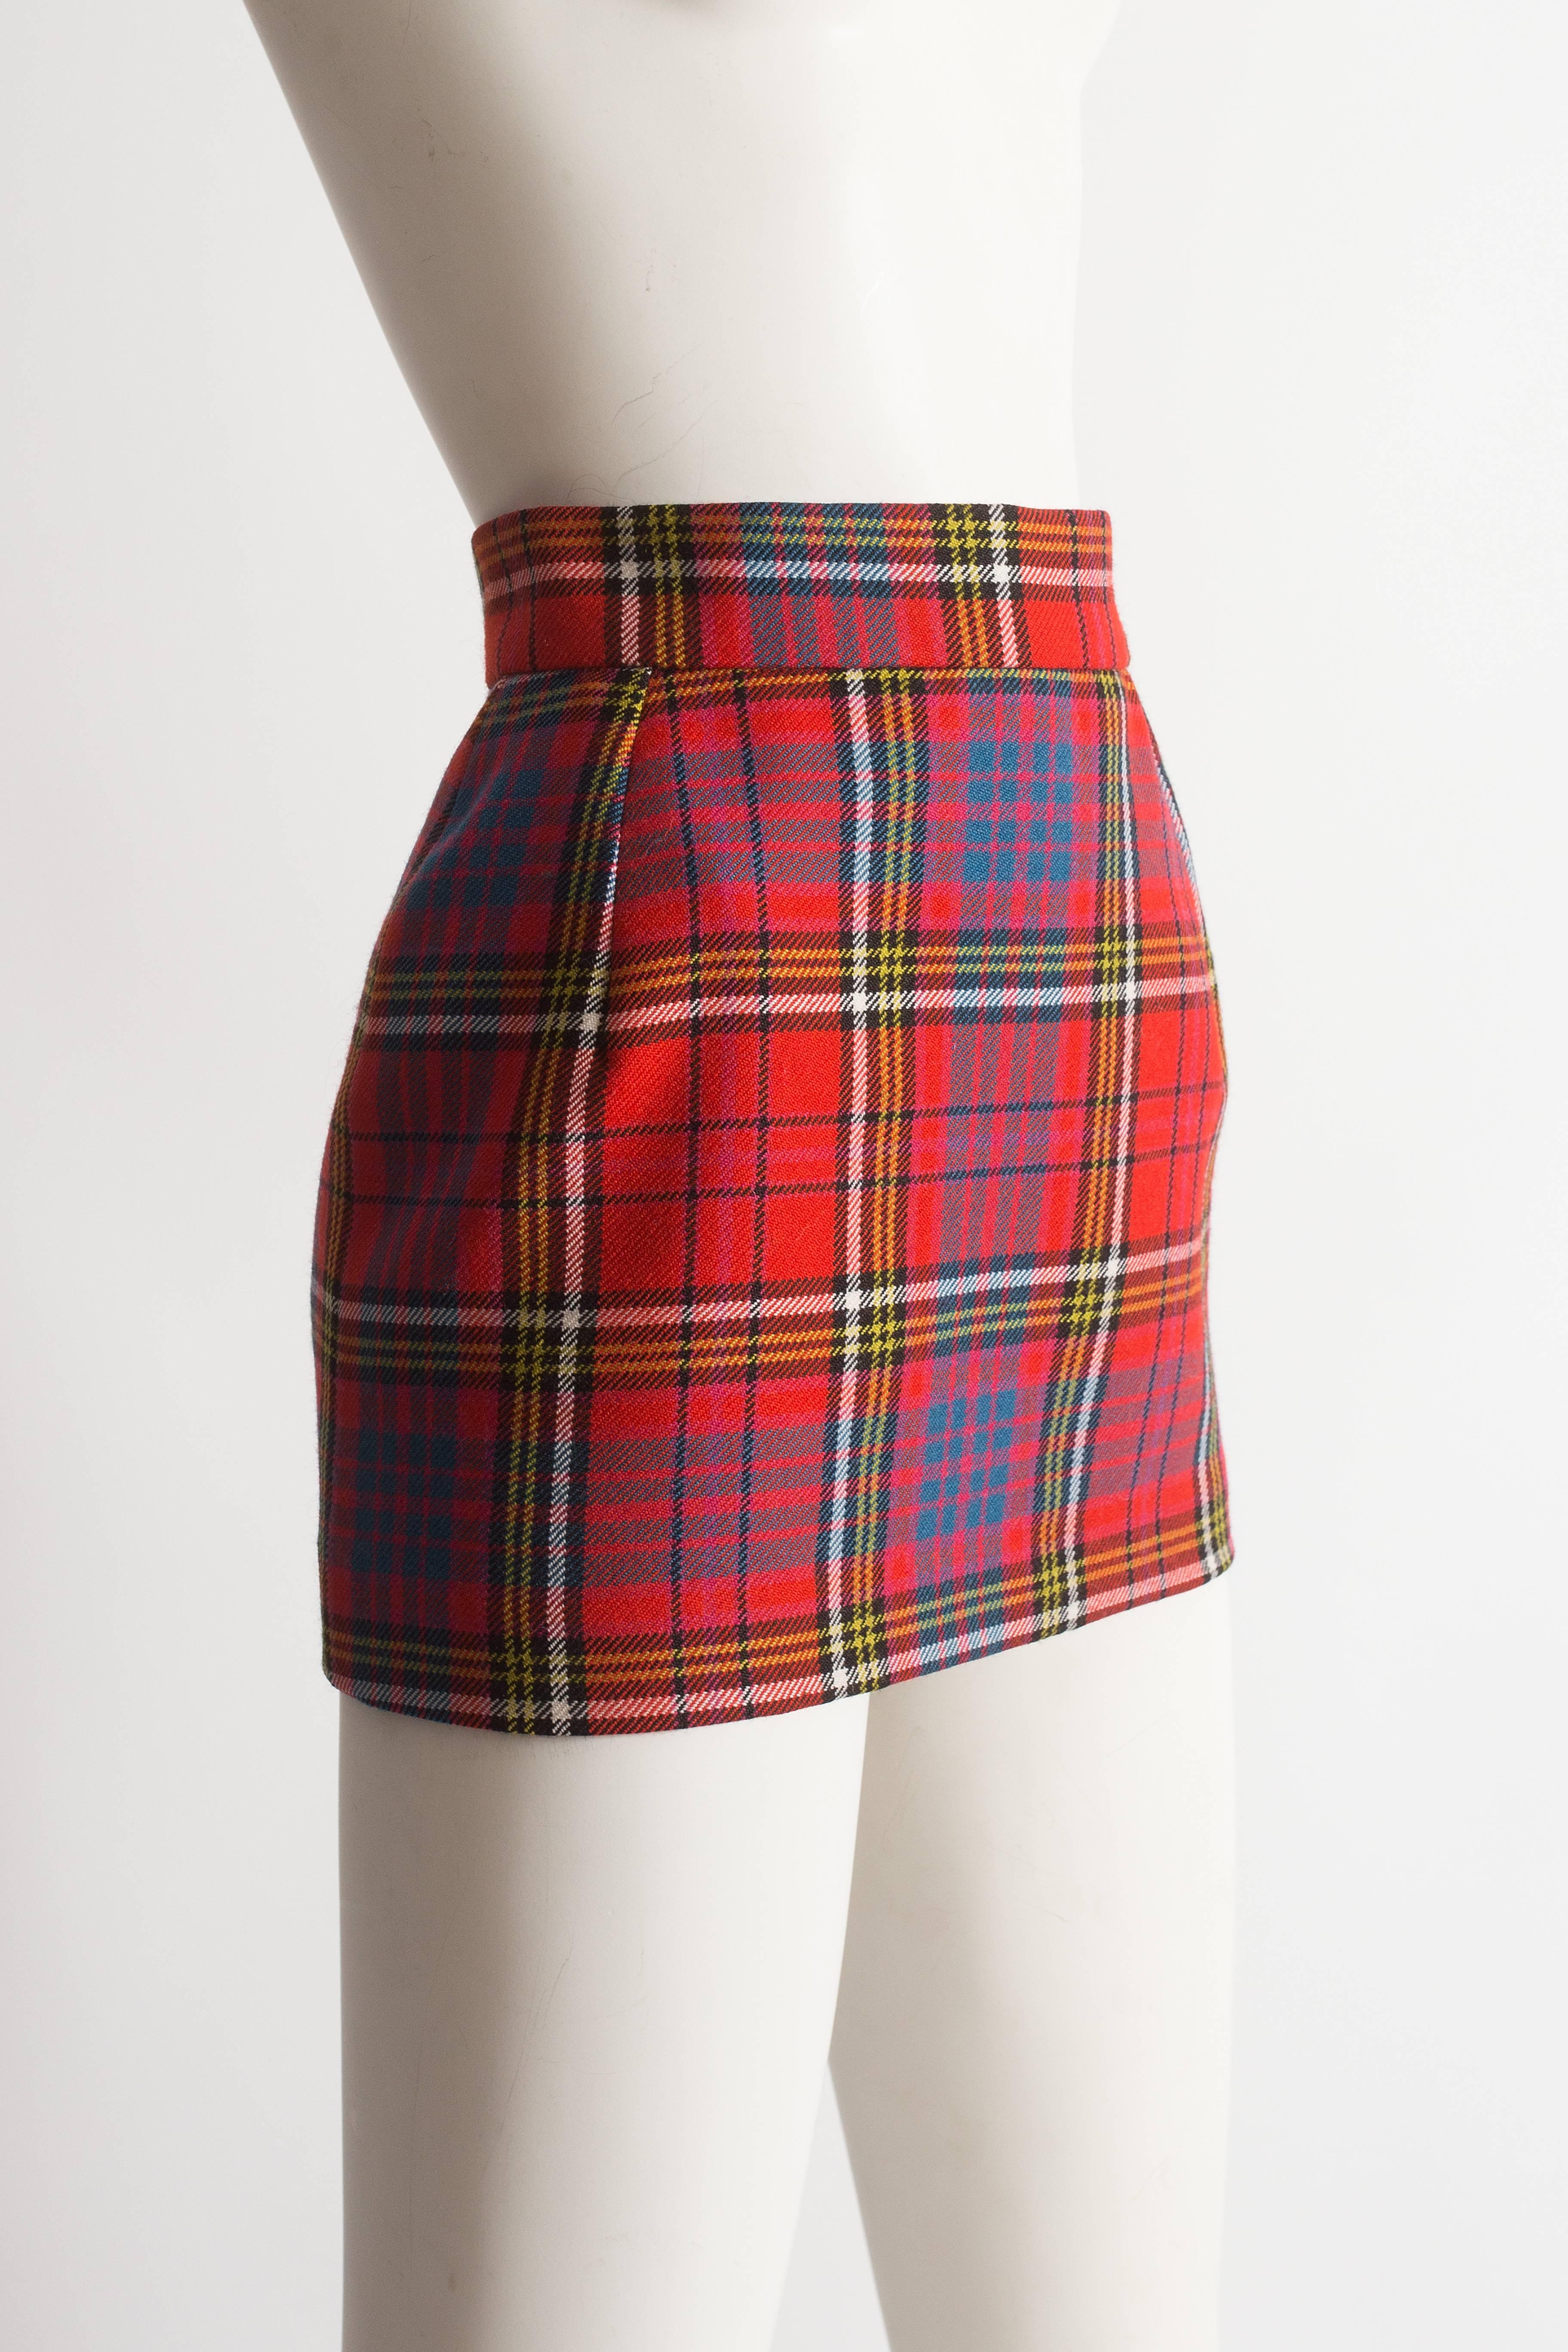 Rare Vivienne Westwood tartan wool mini skirt, Autumn-Winter 1993. Zip closure, satin lining and gold orb button closure.